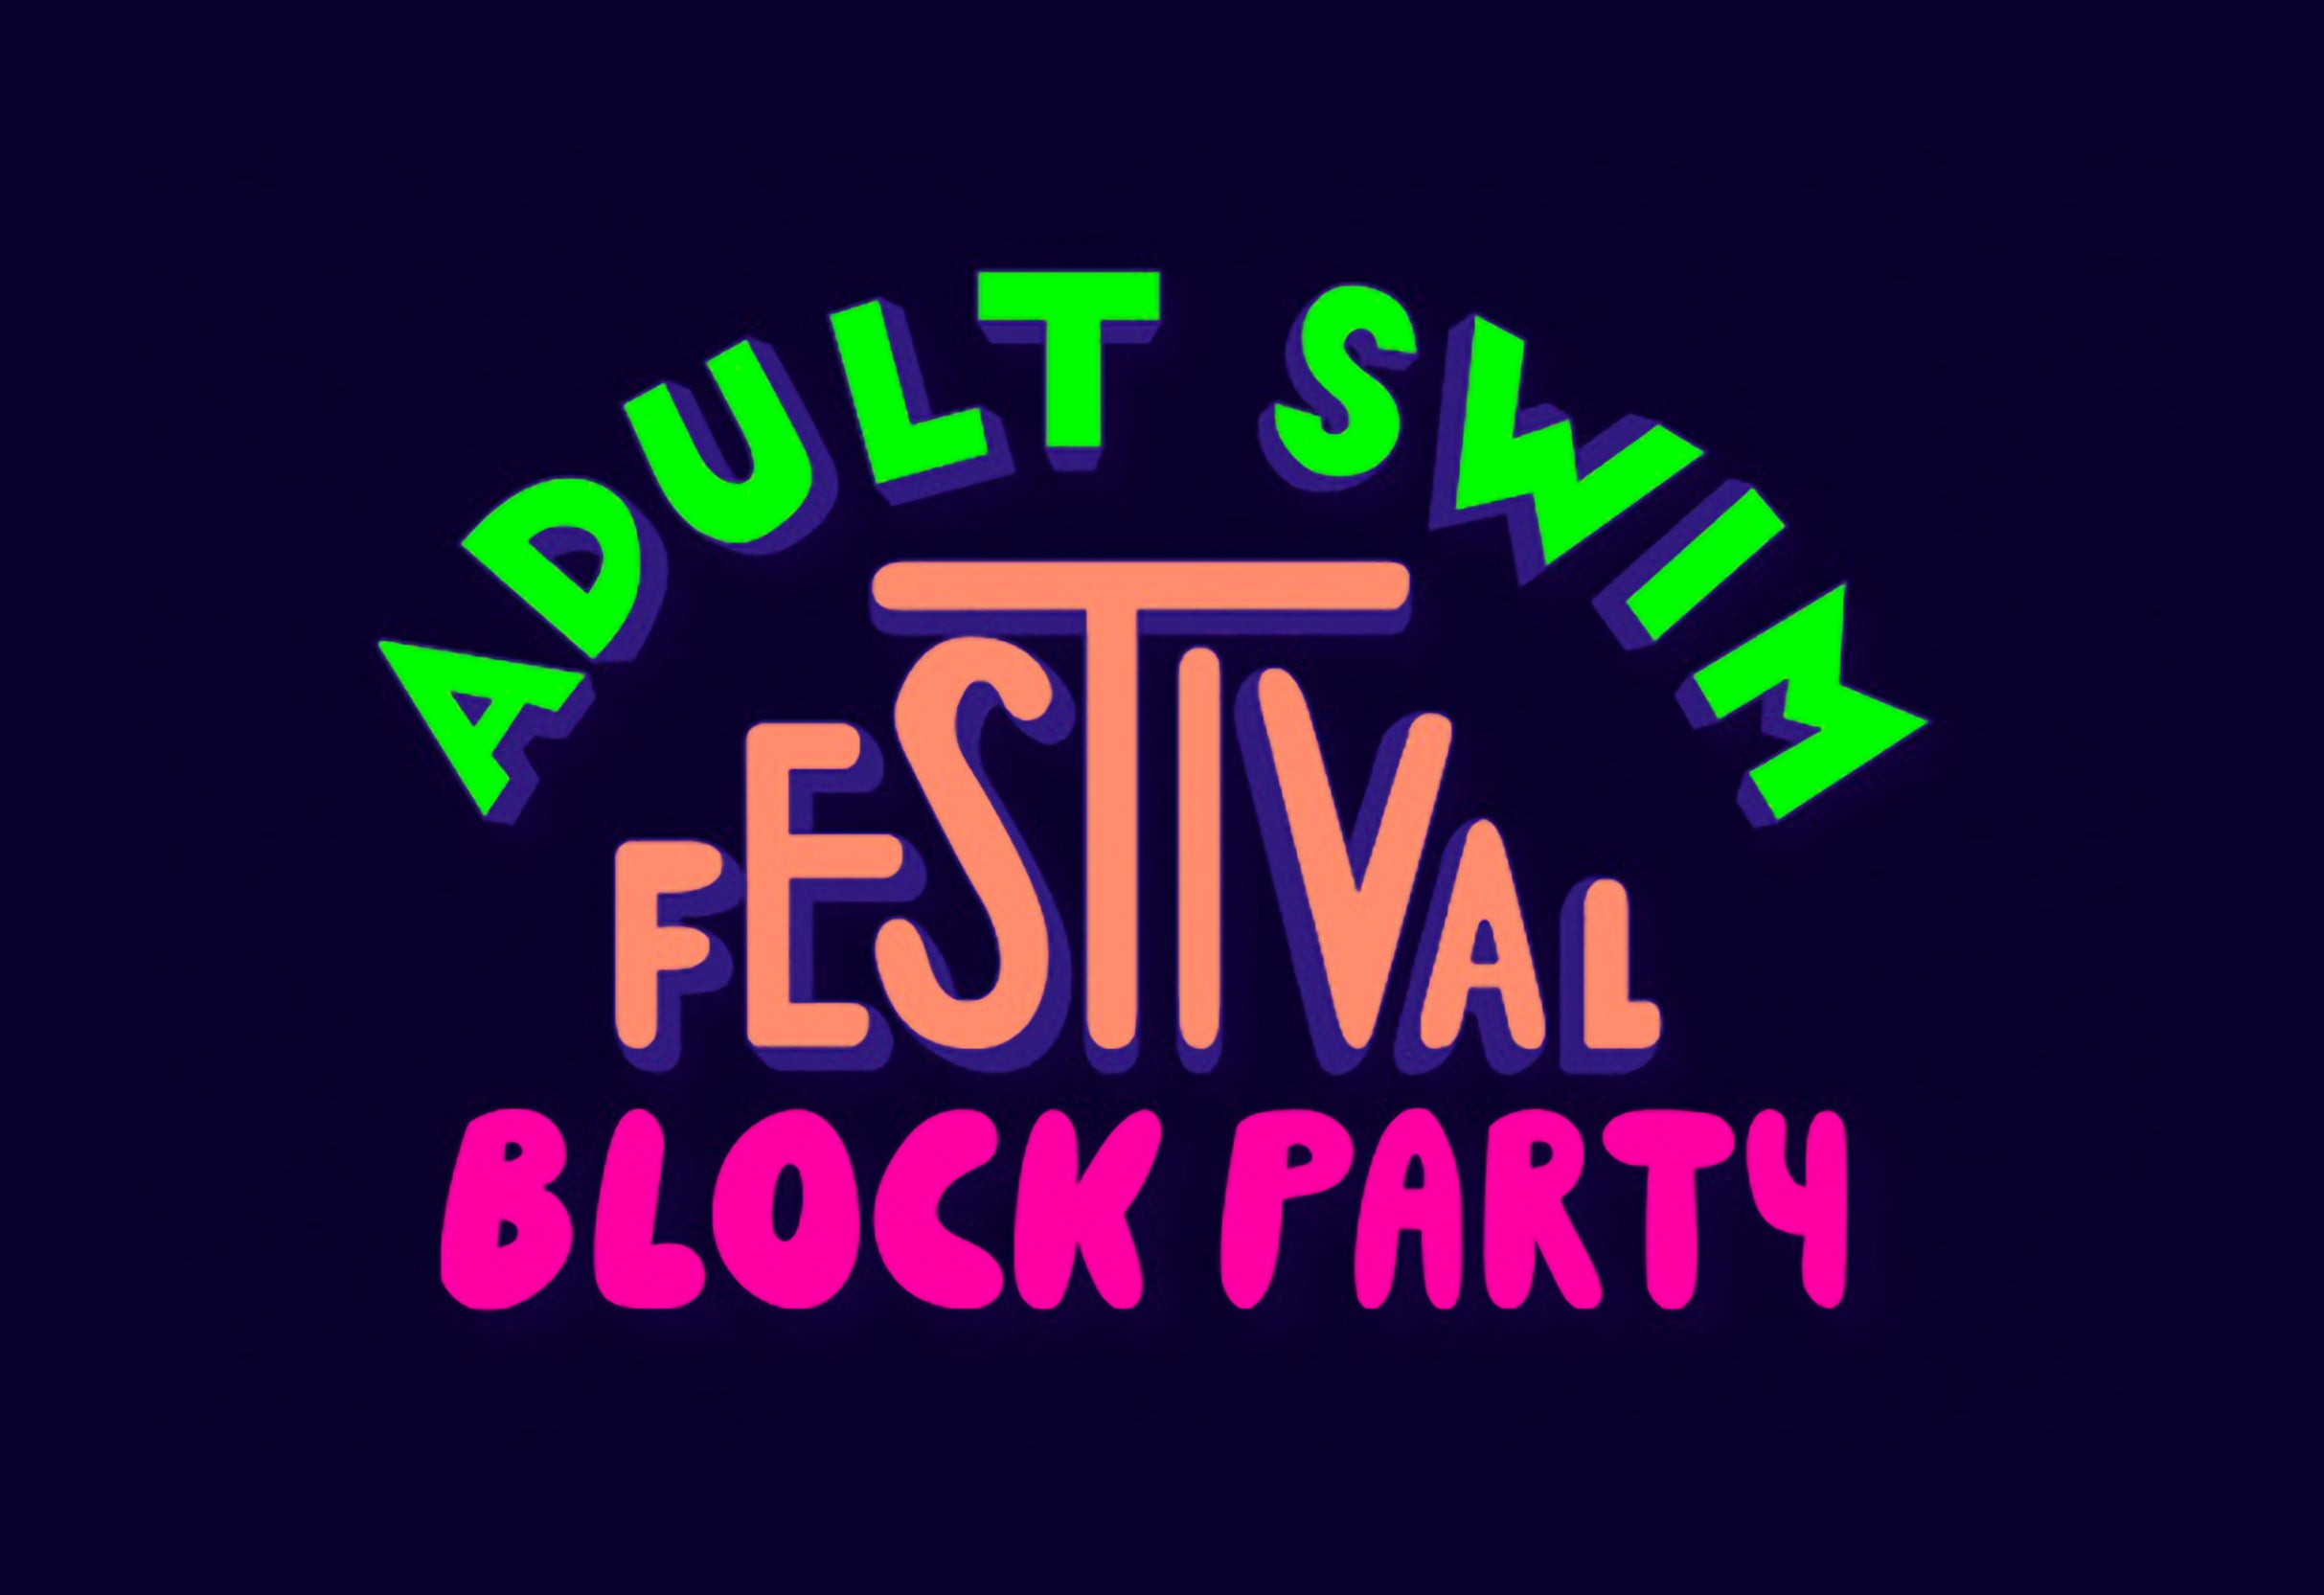 Adult Swim Festival Block Party Sunday Passes in Philadelphia promo photo for Adult Swim presale offer code